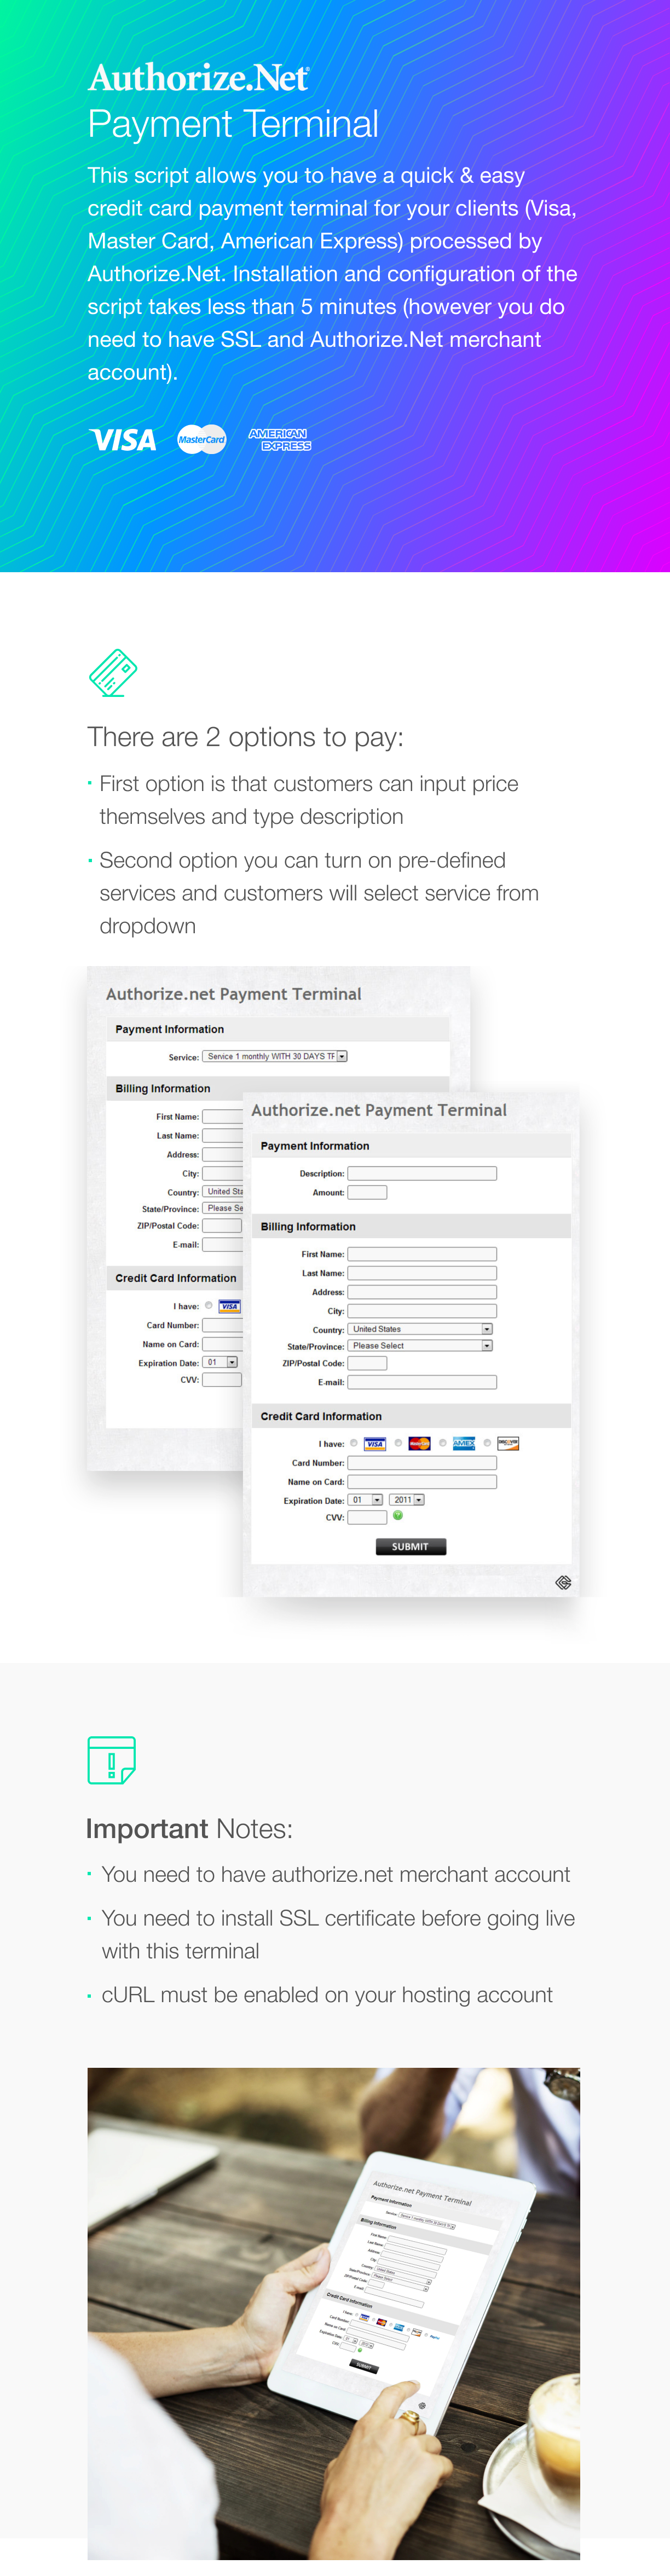 Authorize.net Payment Terminal - 1